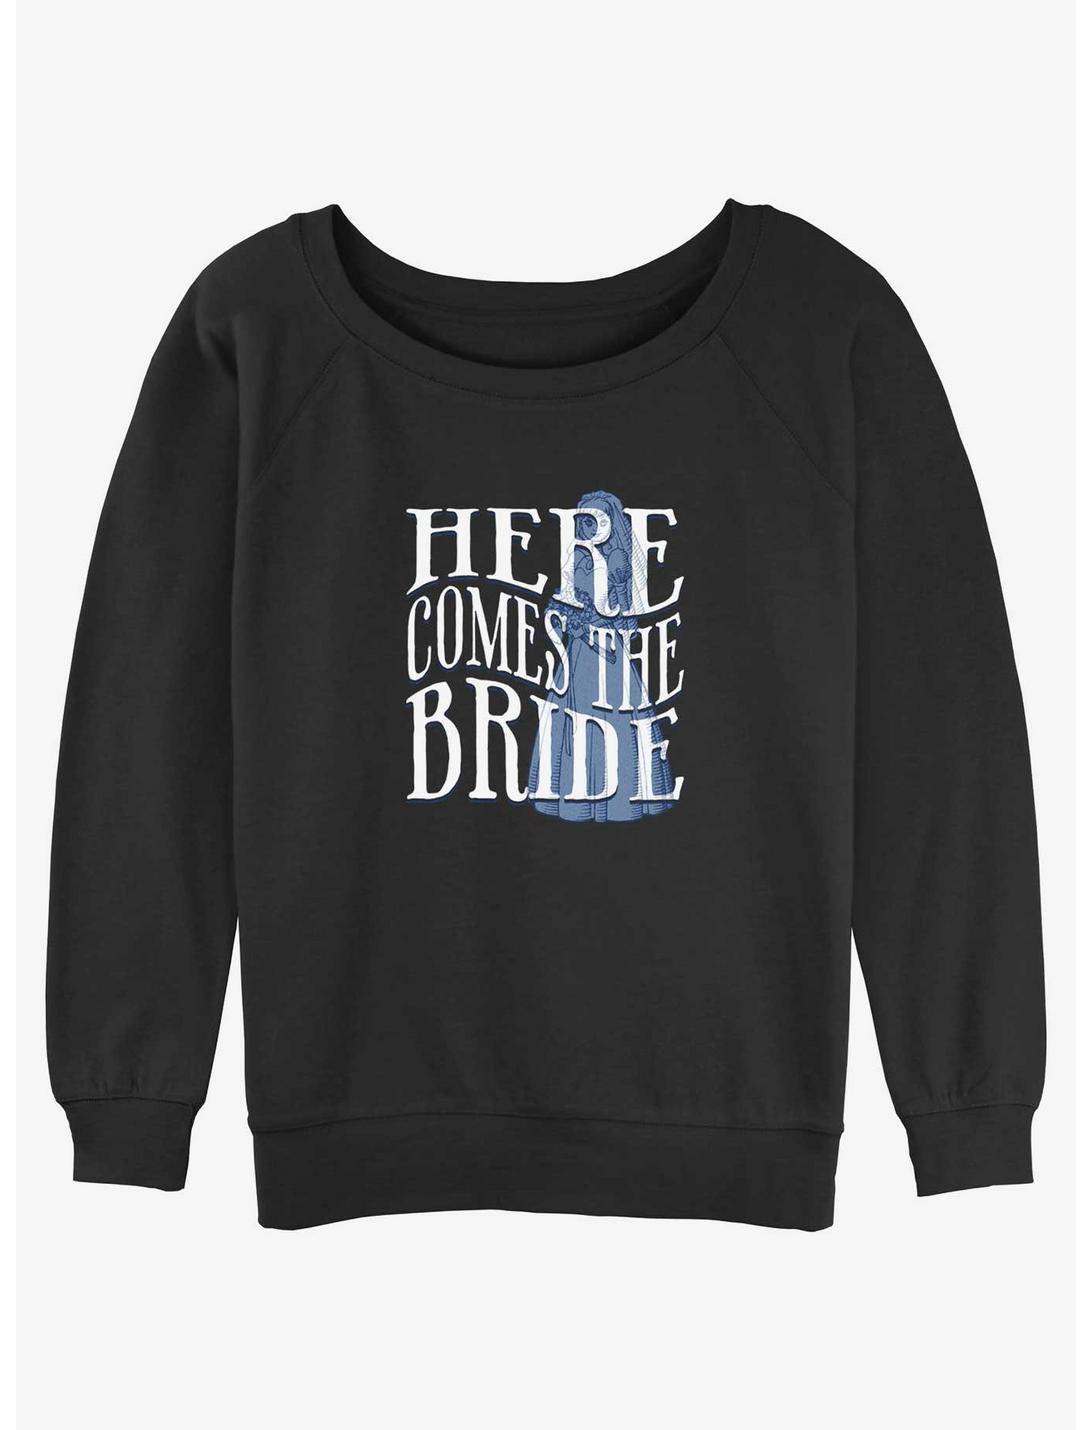 Disney Haunted Mansion Here Comes The Ghost Bride Girls Slouchy Sweatshirt, BLACK, hi-res